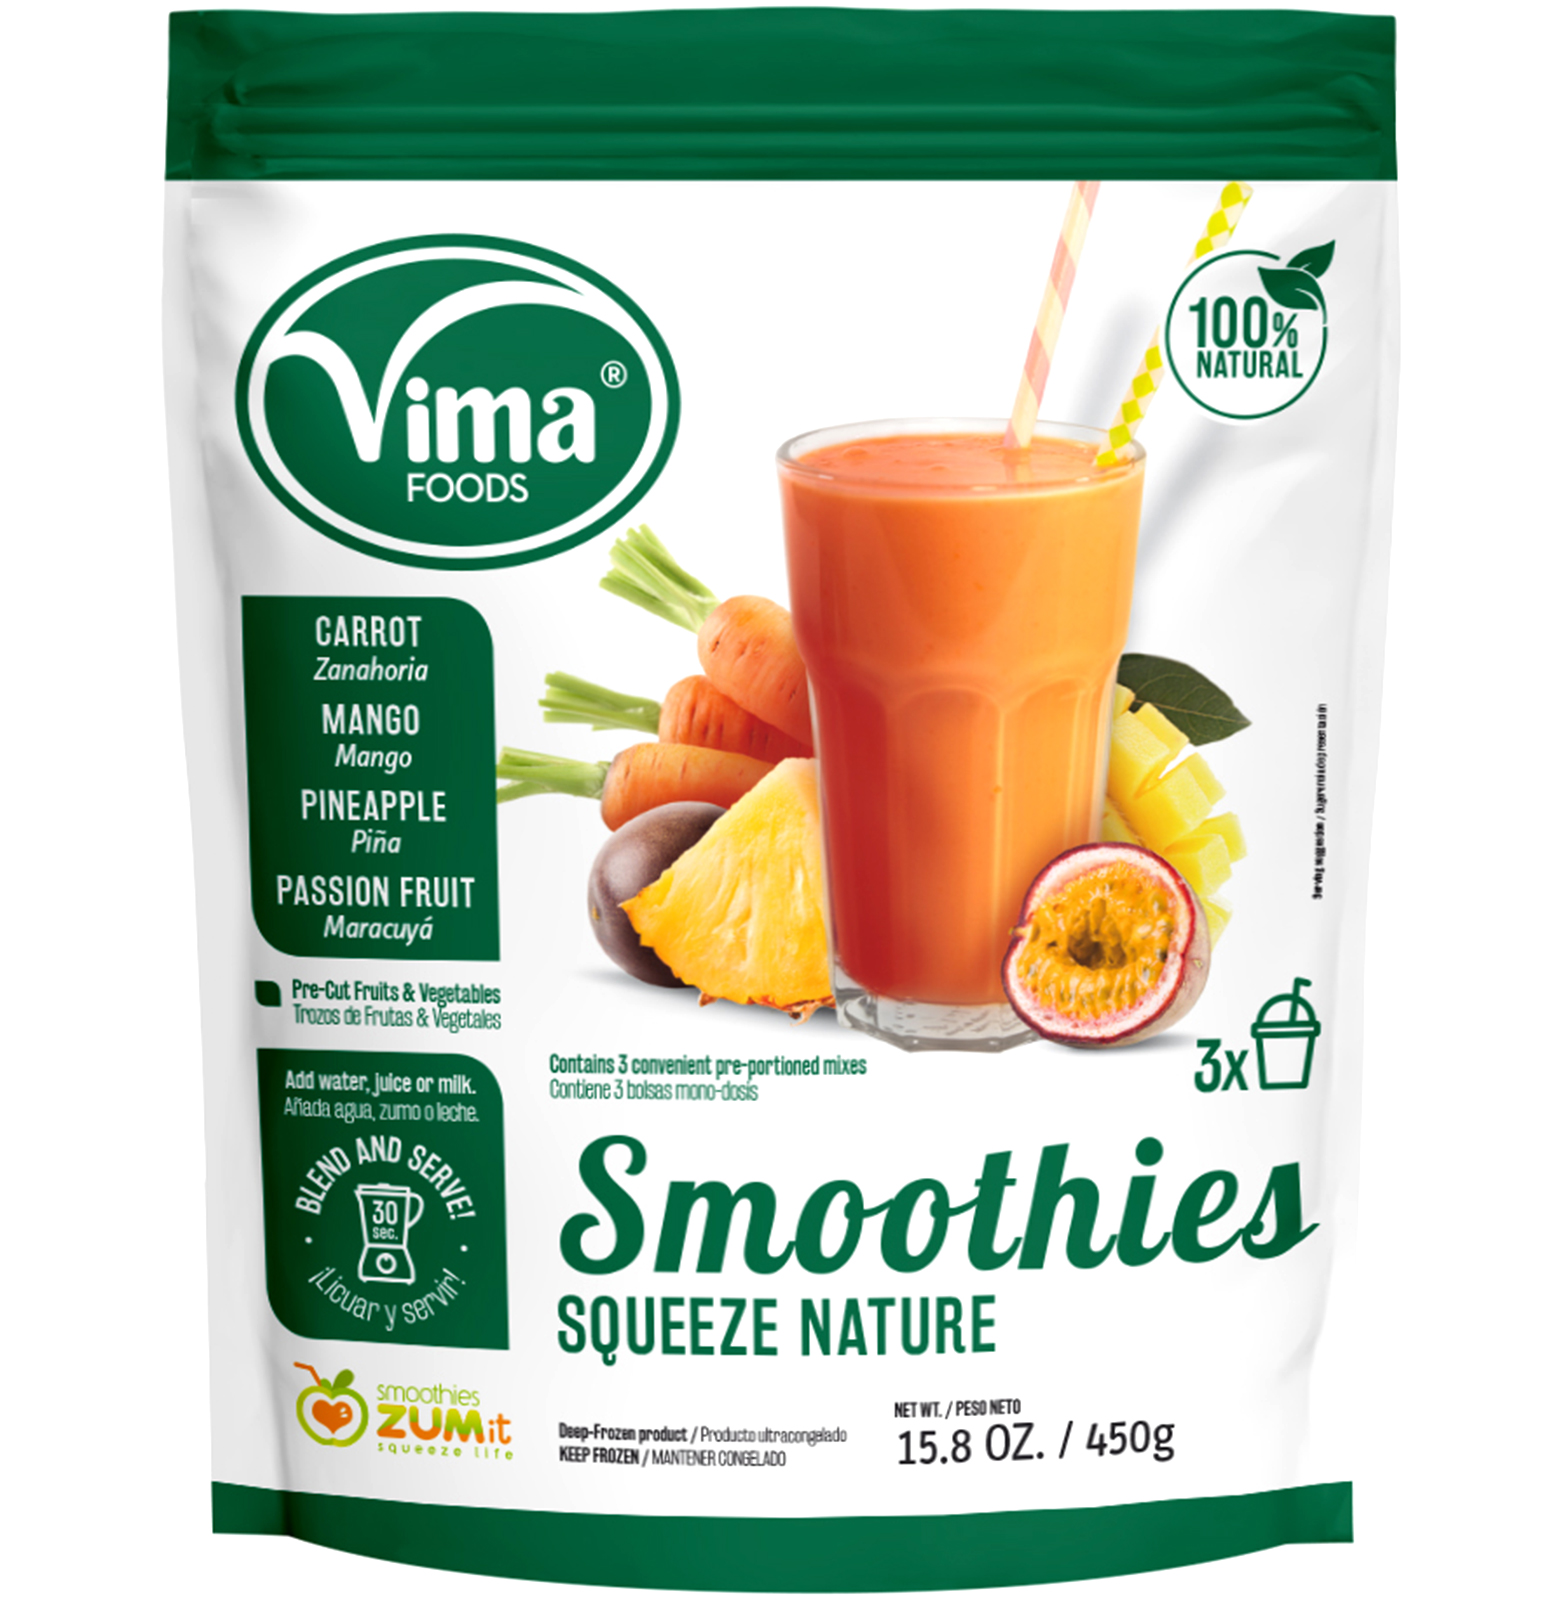 Squeeze Nature - VIMA Foods